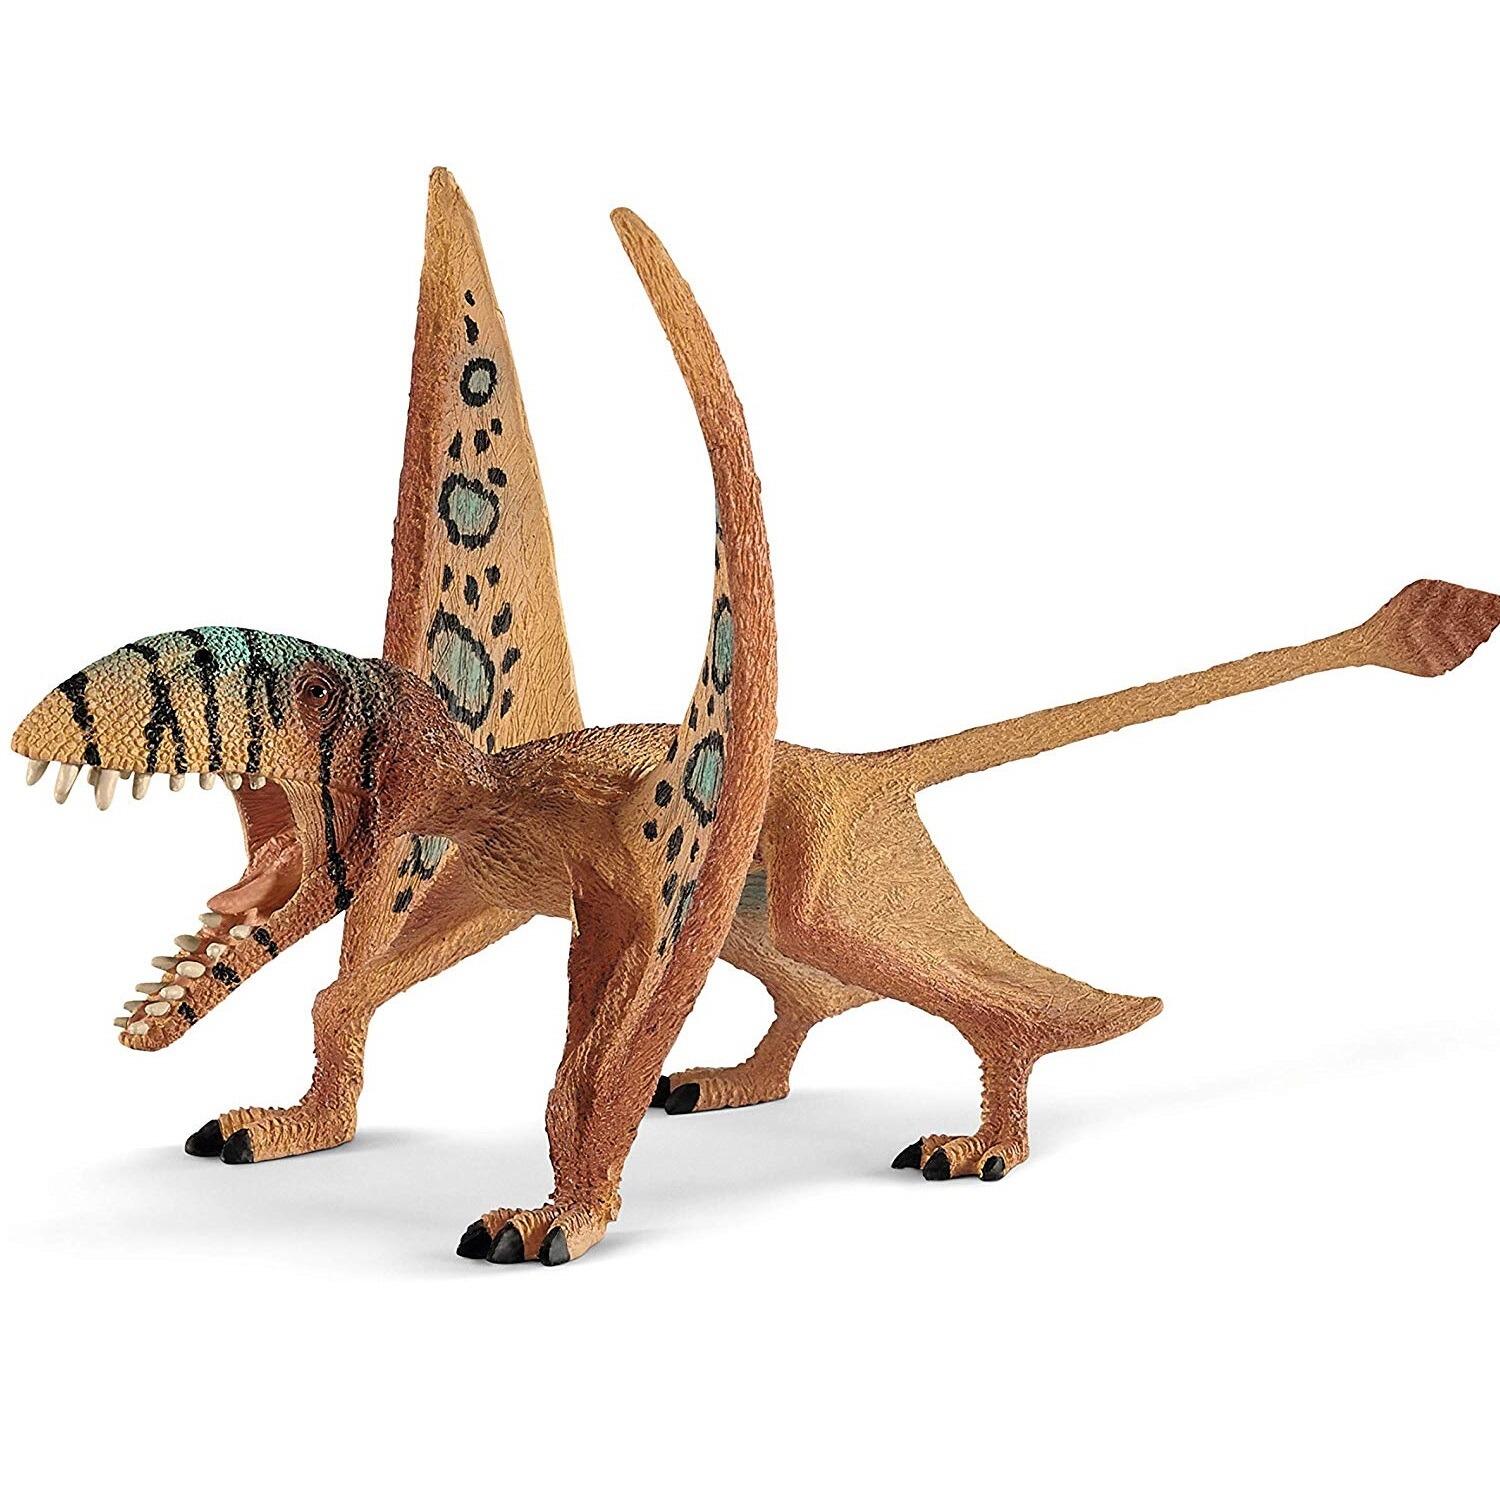 Schleich Dinosaurs Dimorphodon 15012 Figure